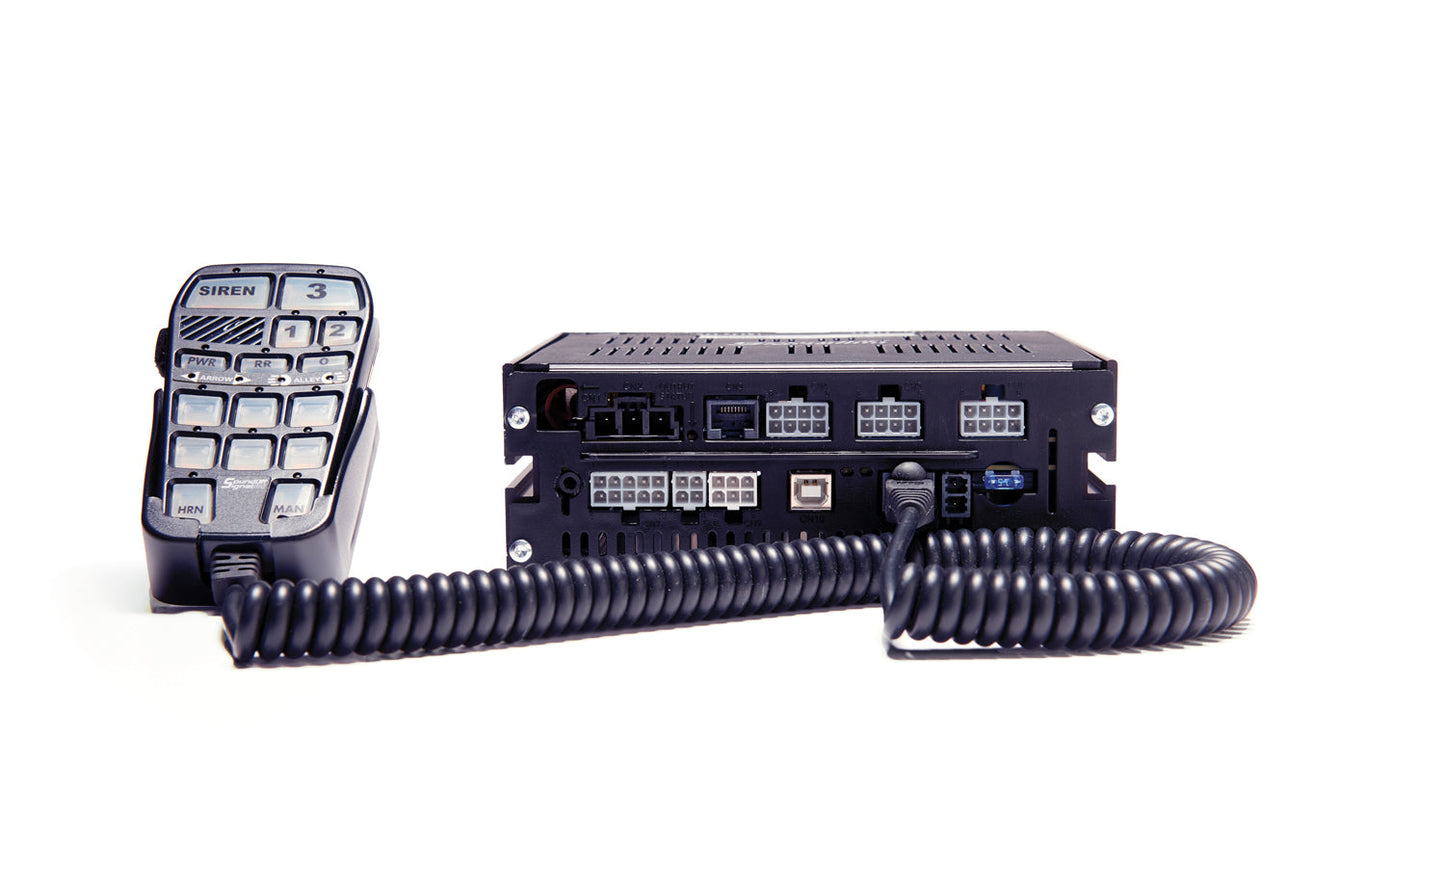 Soundoff Signal ENGSA5200RSR Blueprint® 500 Series Remote Control System With Knob Control, 10-16V - 200 Watt Dual-Tone